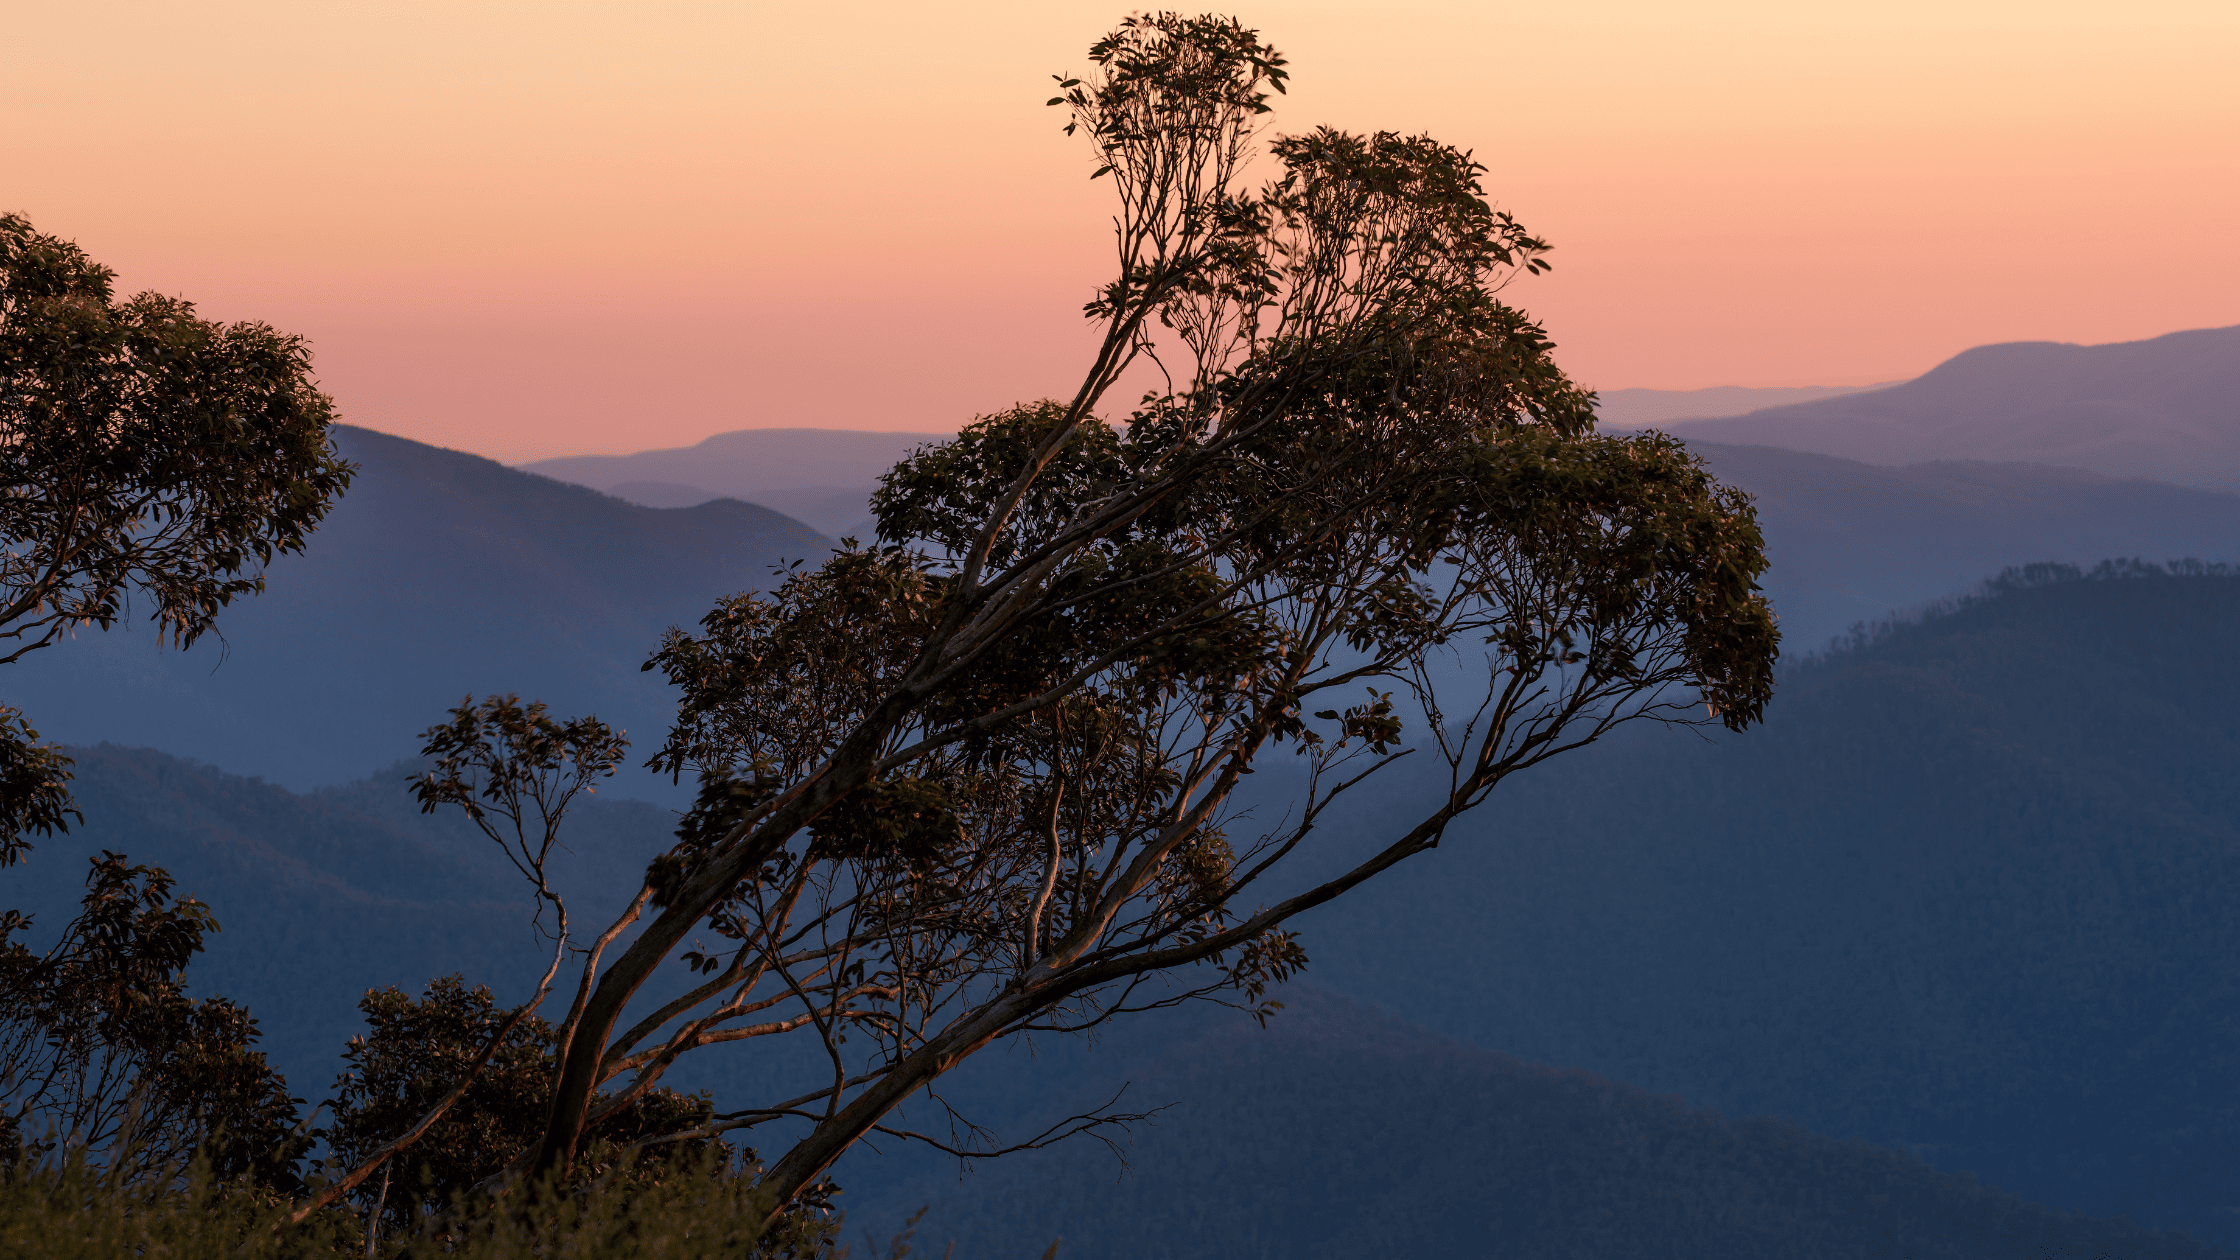 Rural Australian landscape at sunrise